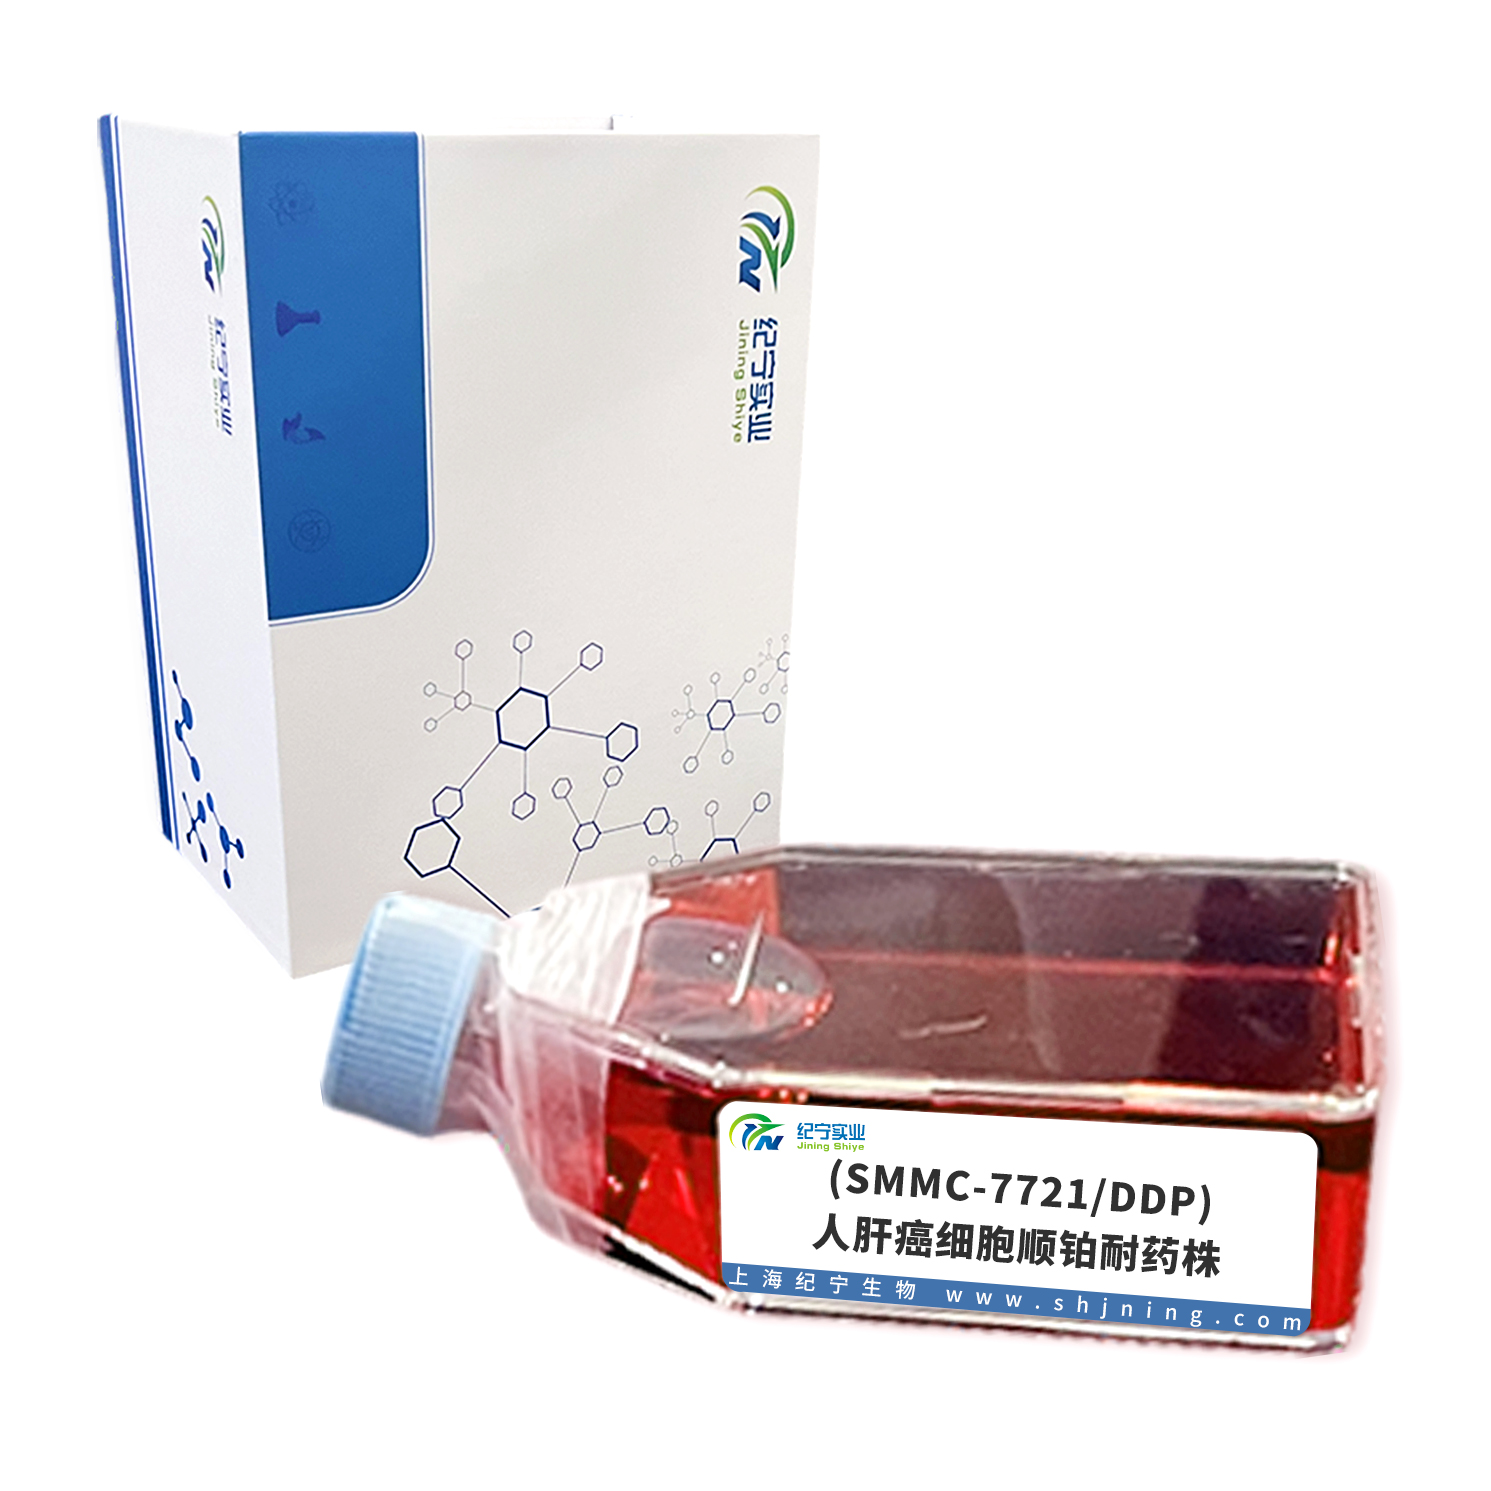 (SMMC-7721/DDP)人肝癌细胞顺铂耐药株